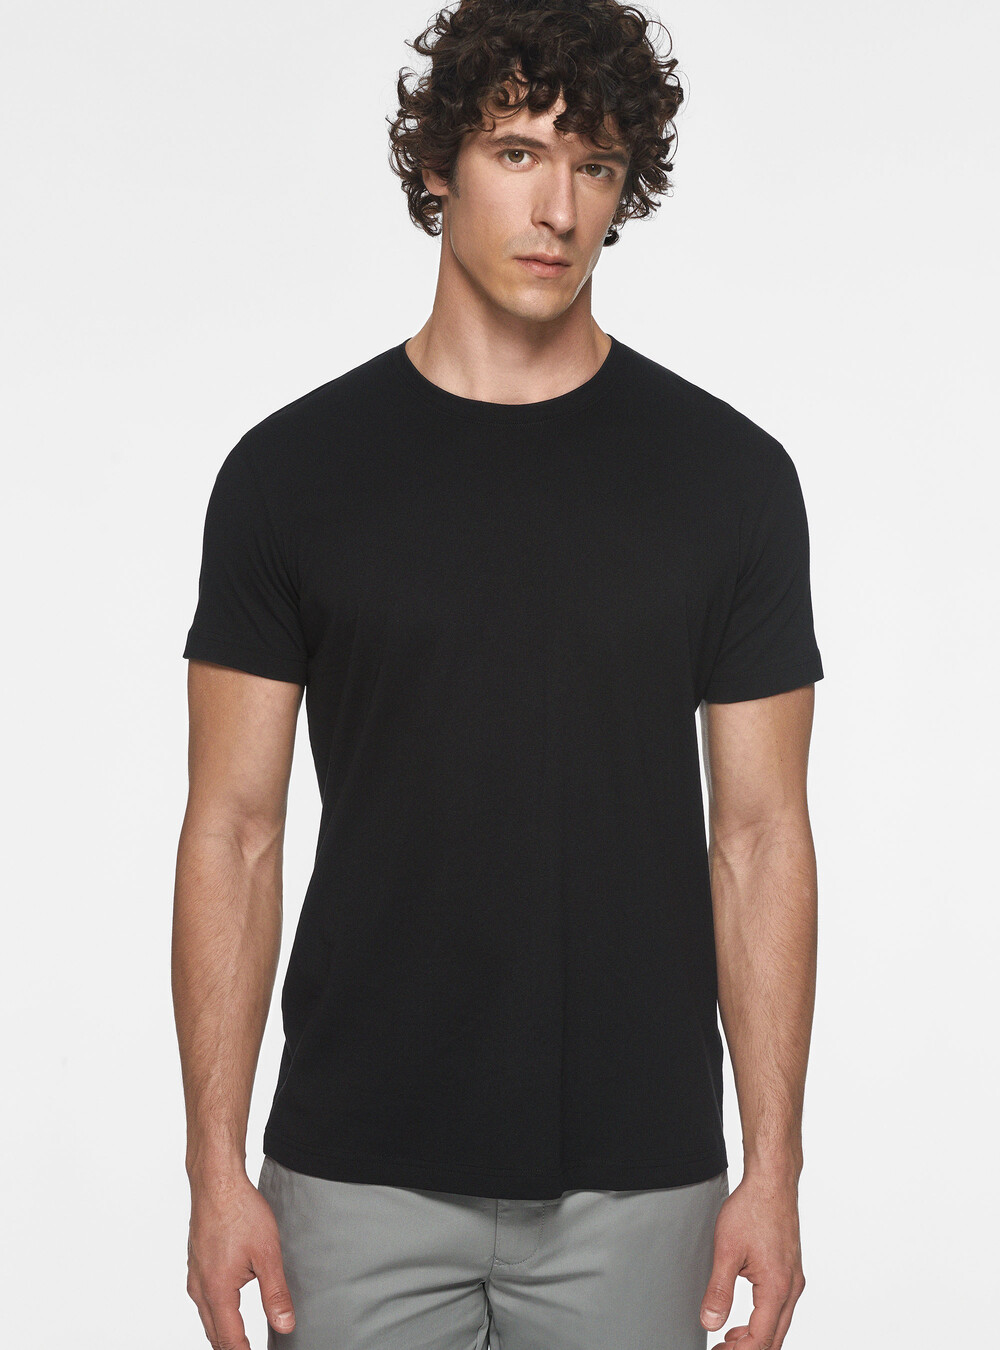 Half-sleeve T-shirt in Supima cotton | Gutteridge | Men's T-Shirt